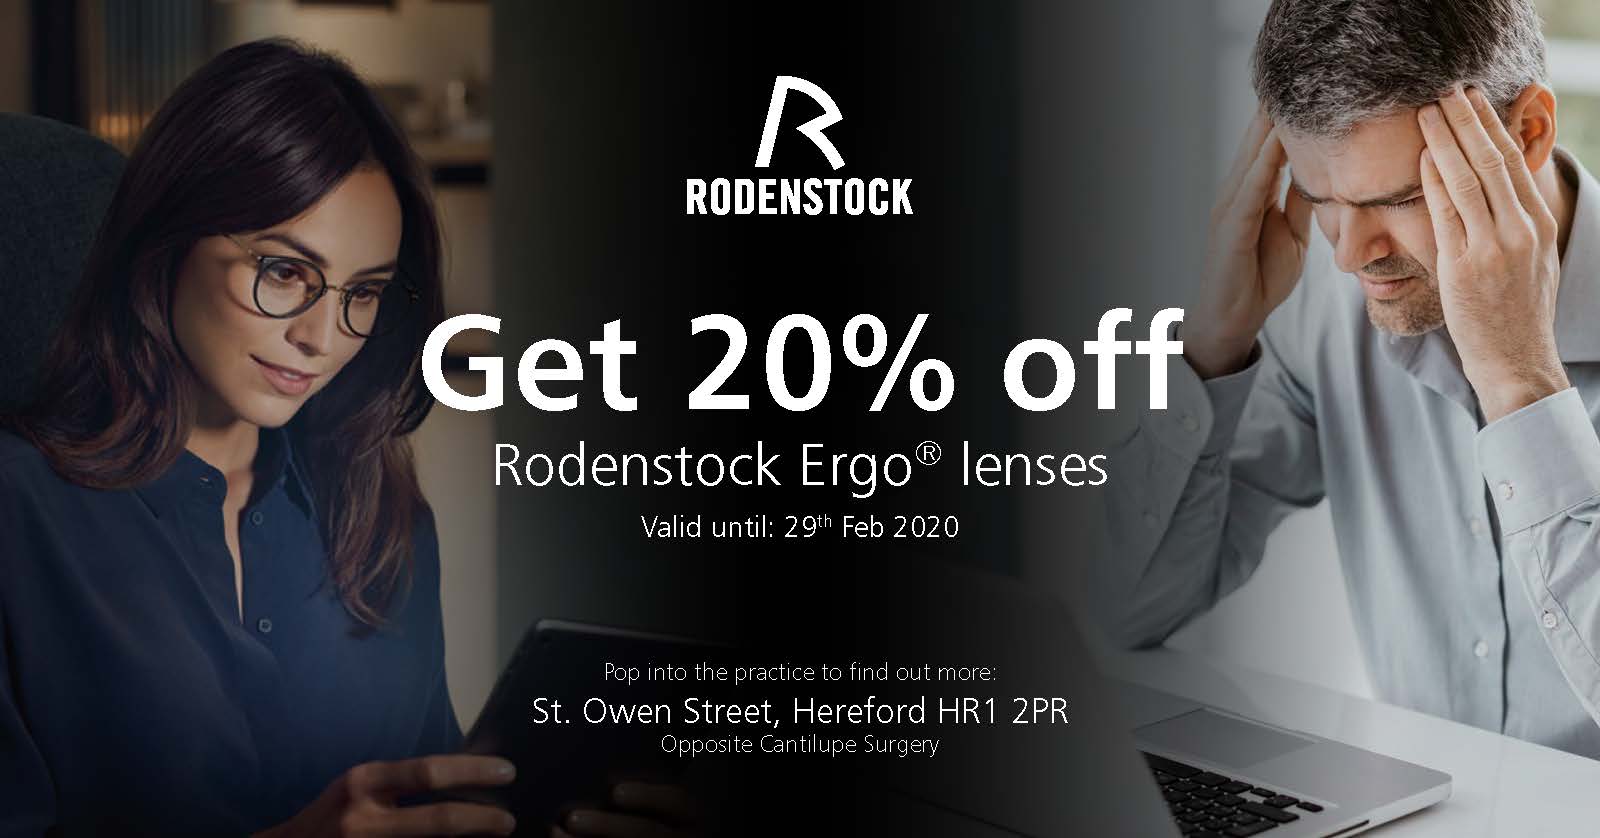 Happy New Year! Enjoy 20% off Rodenstock Ergo® lenses this season